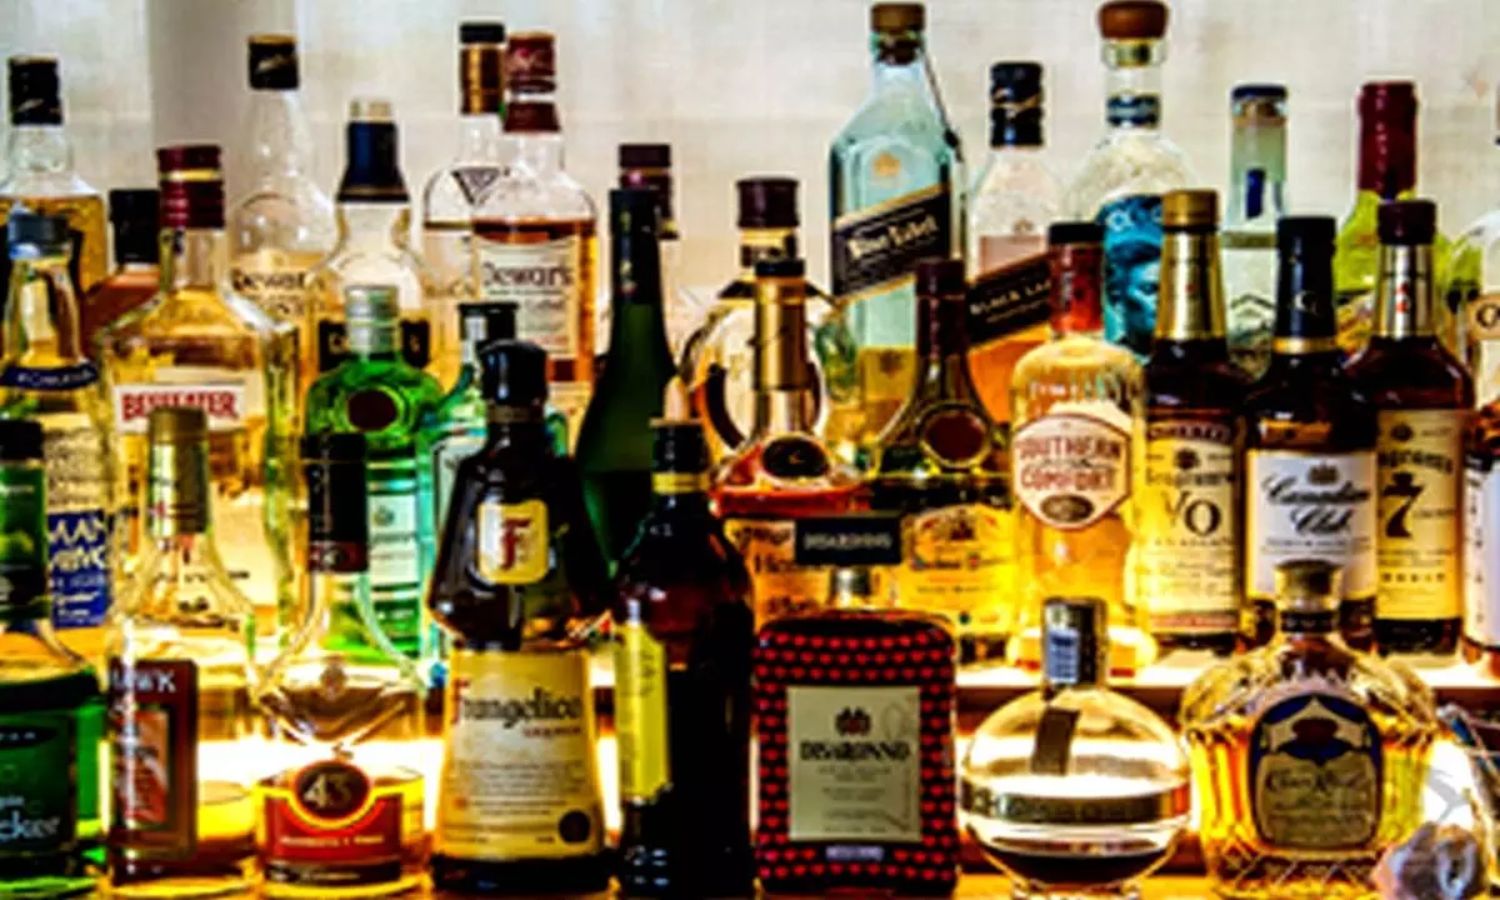 Task Force raids illegal liquor